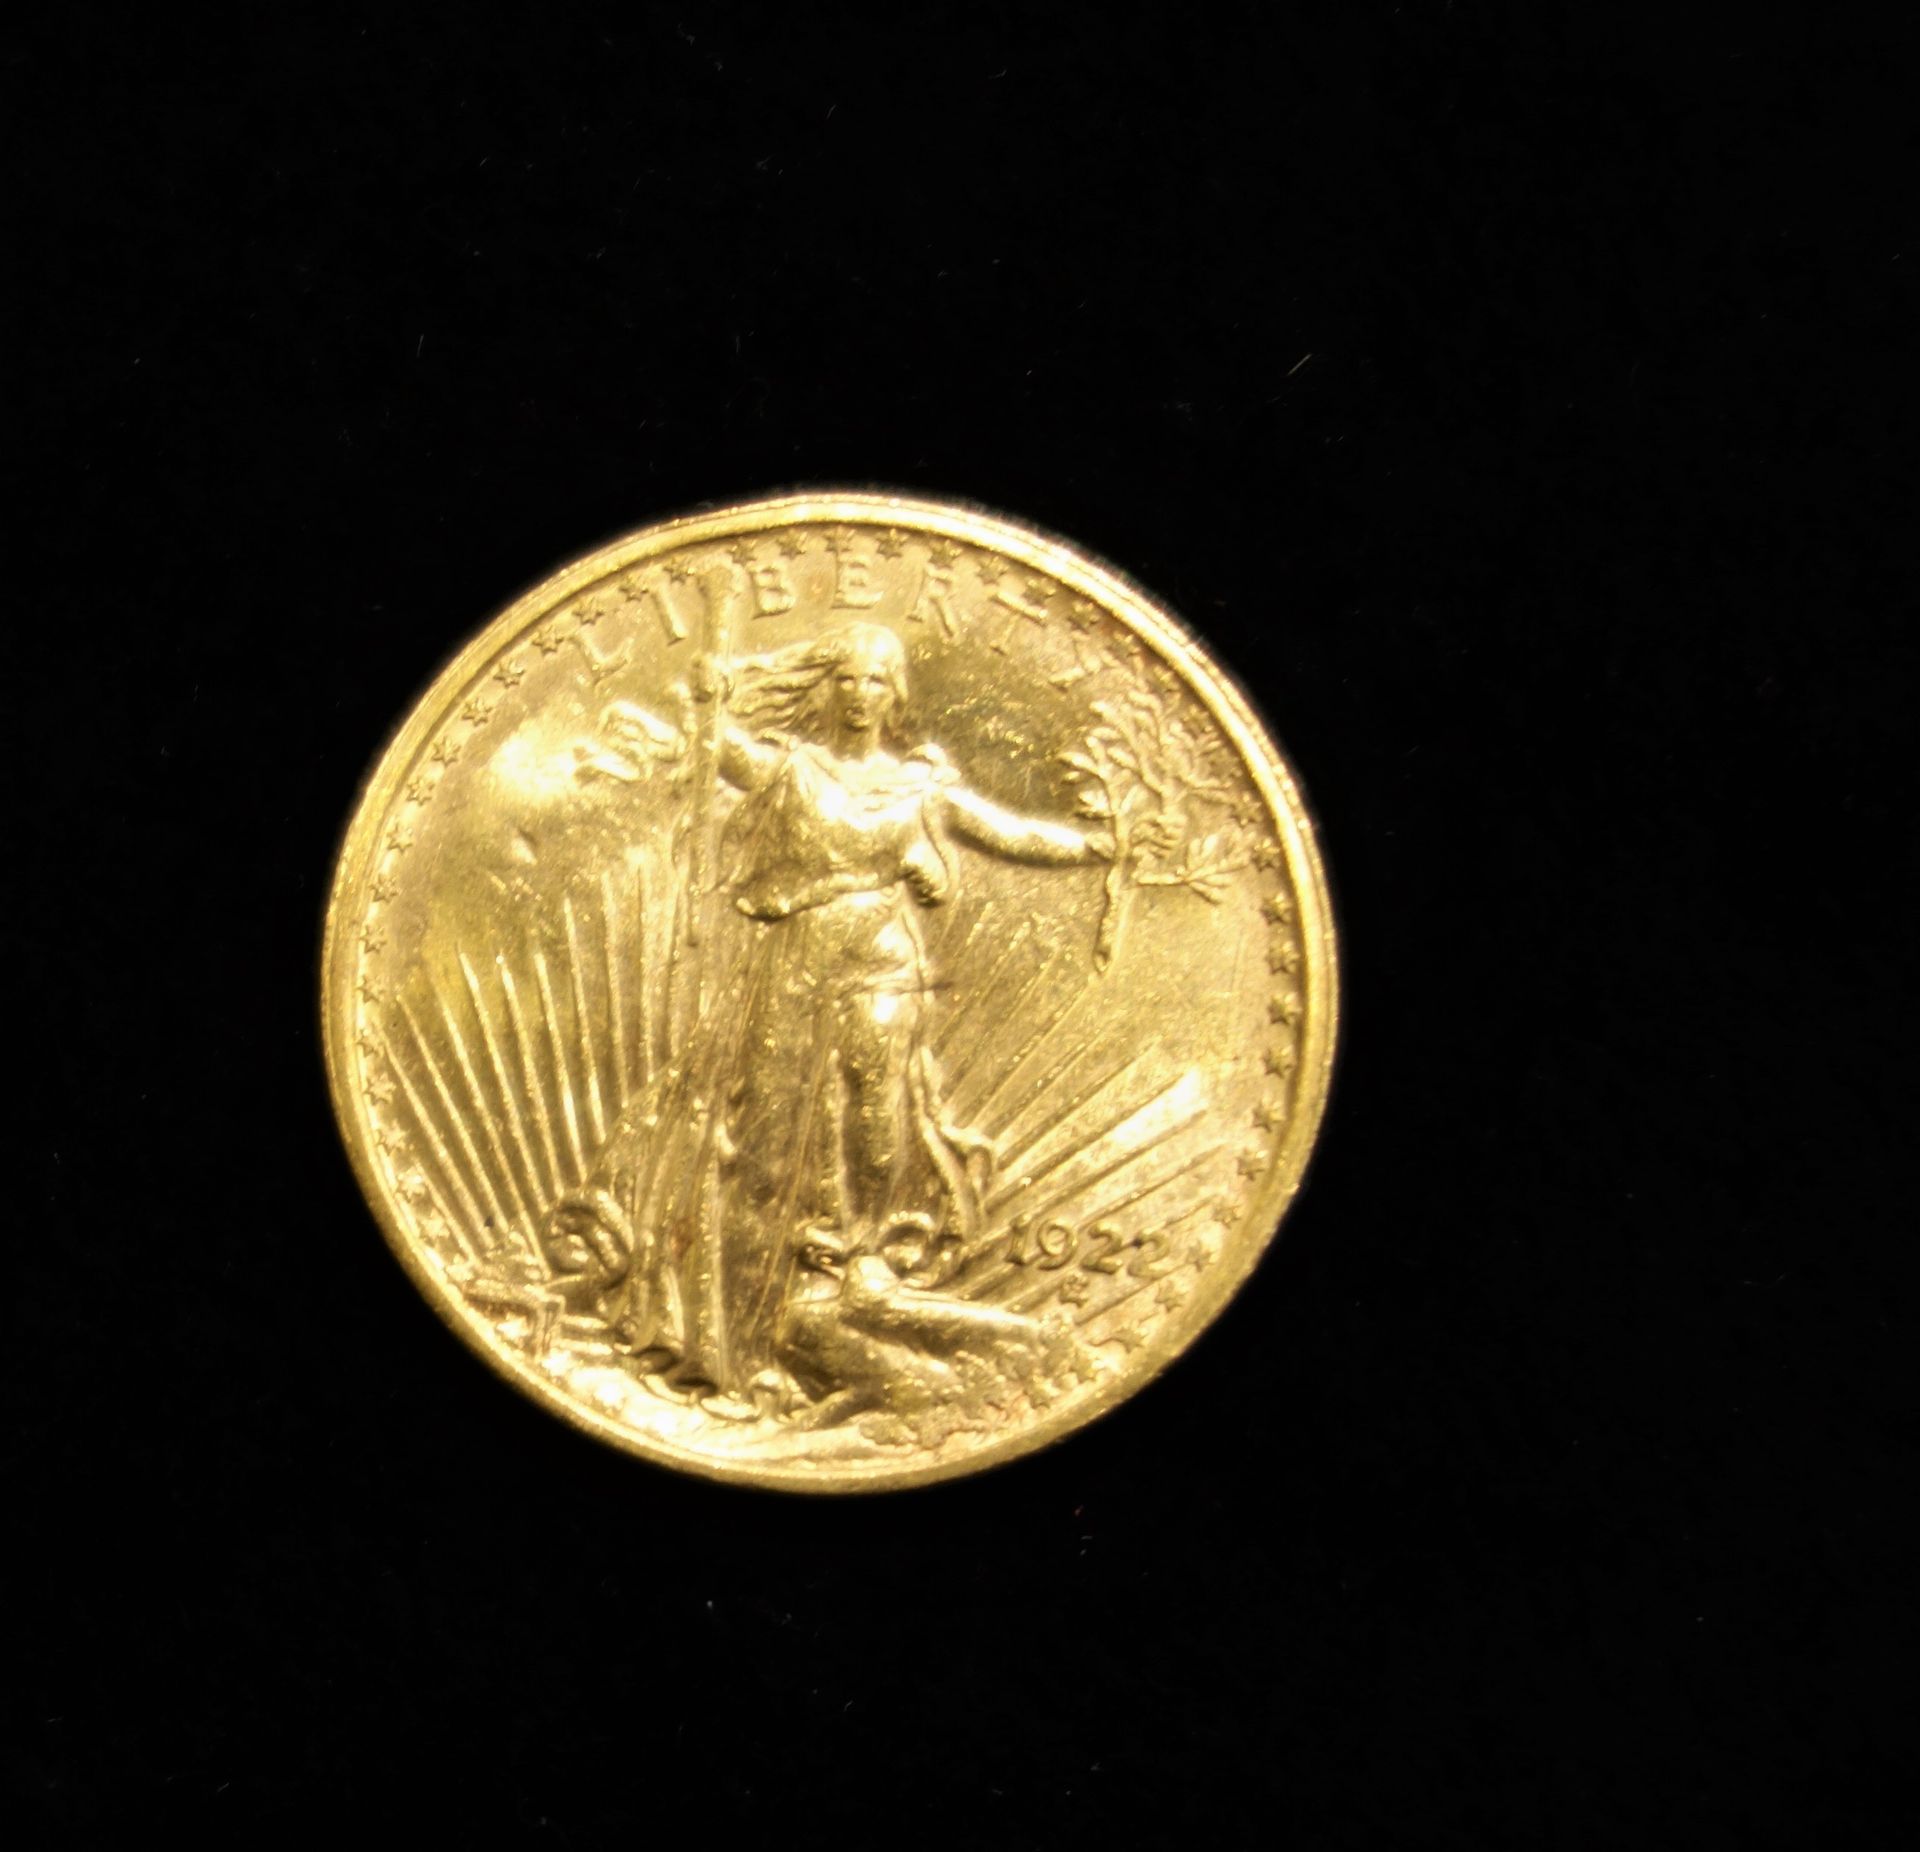 Null Moneda de oro de 20 $ Liberty.
Peso: 33,42 g